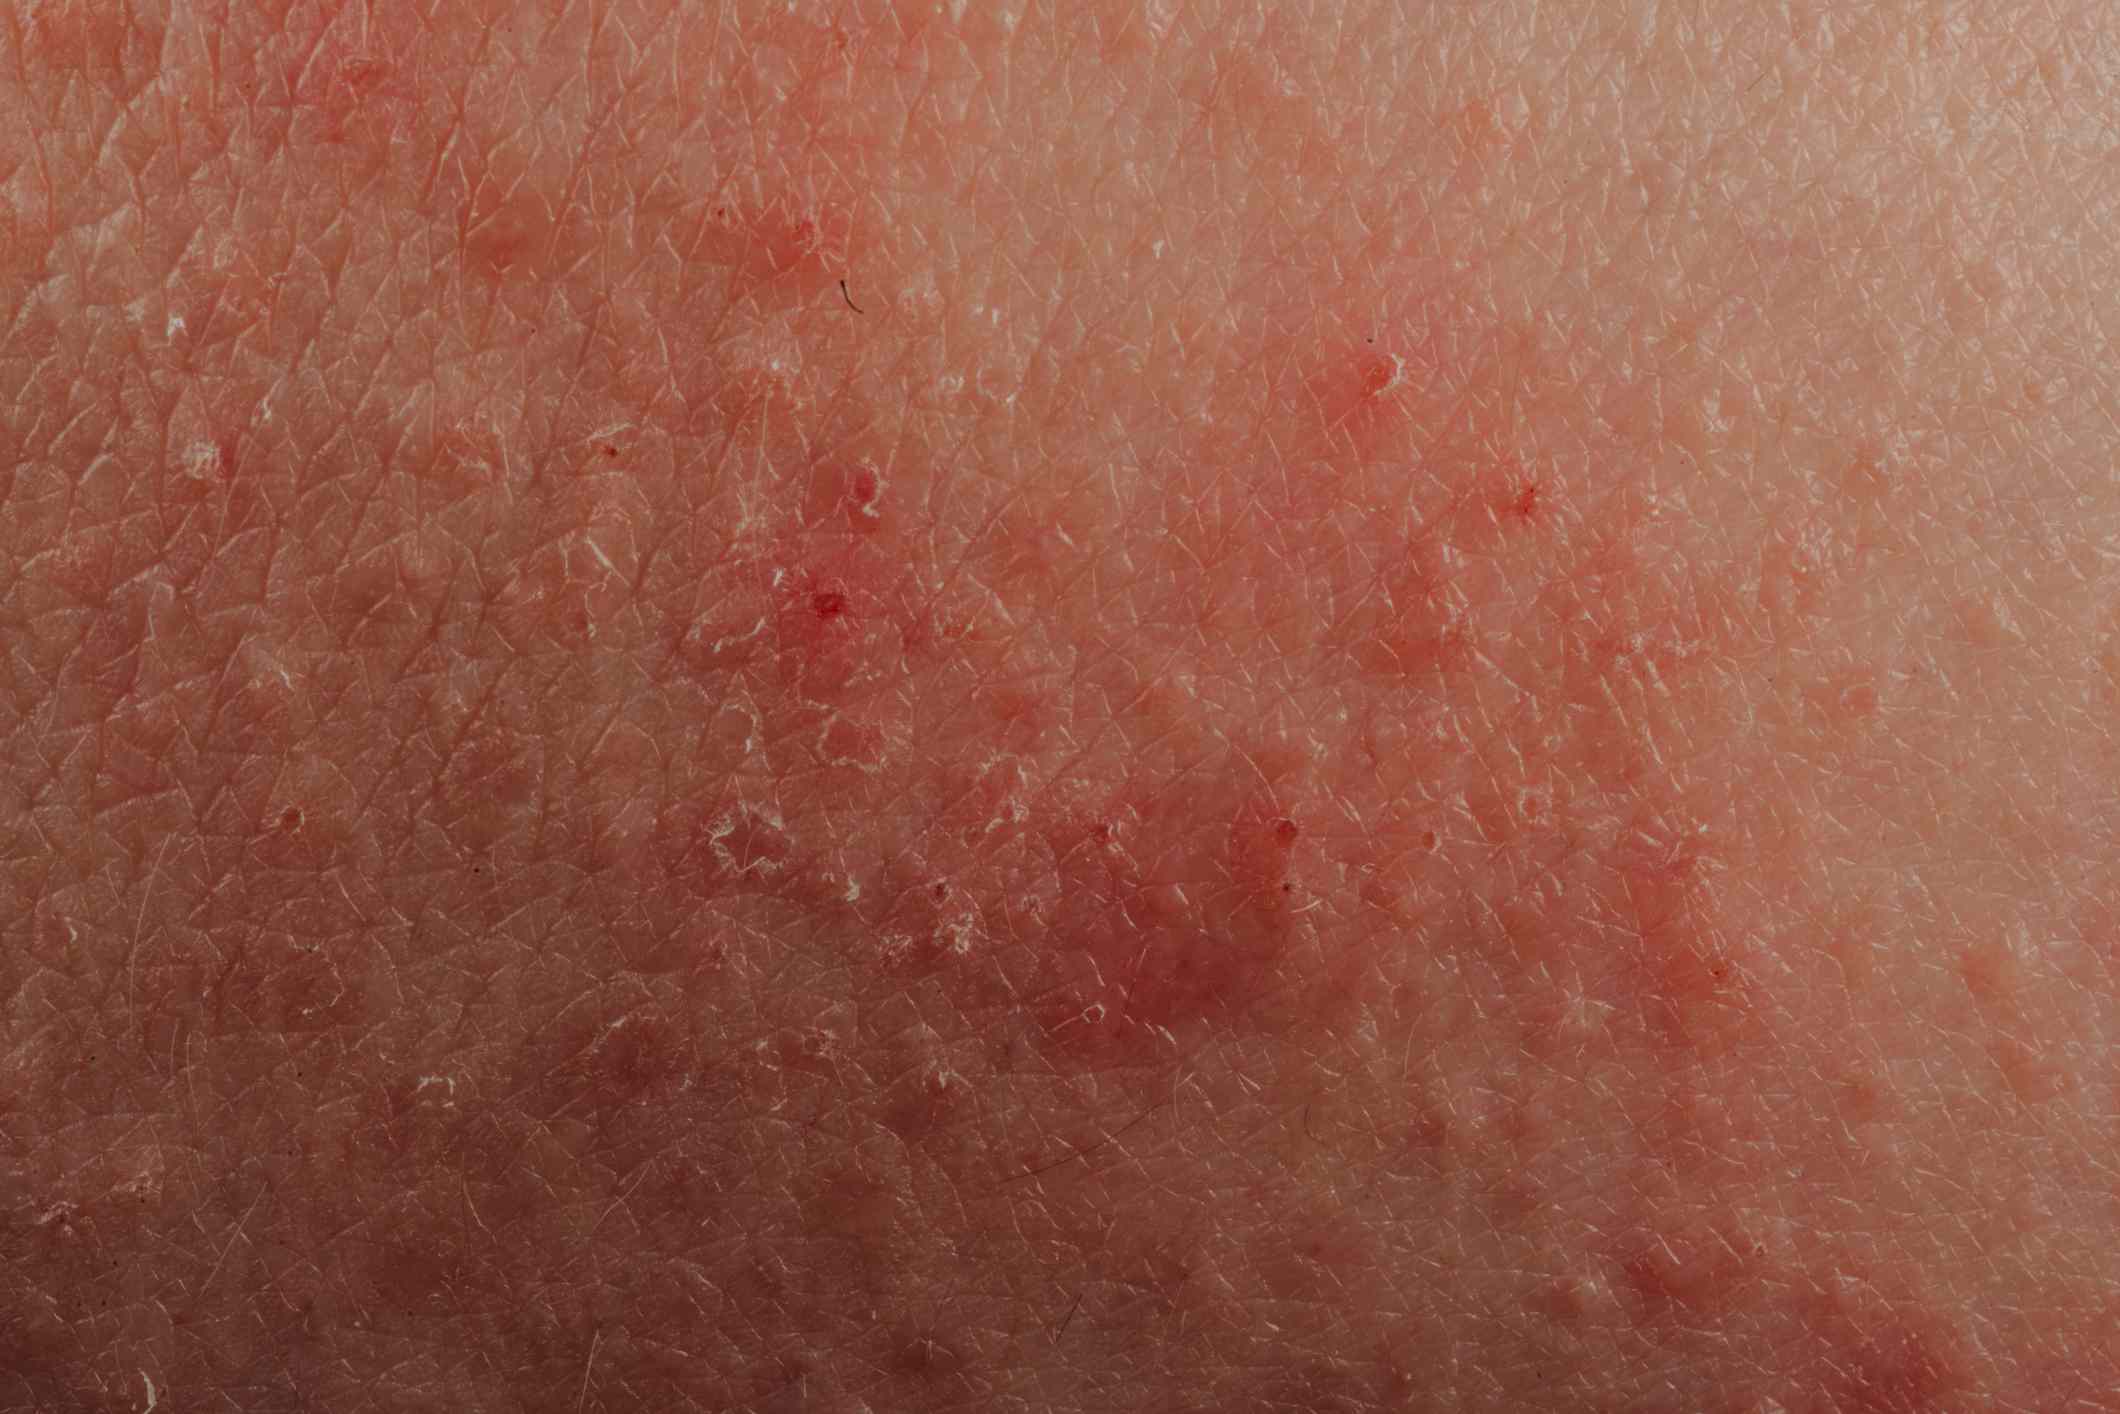 Eczema: Signs, Symptoms, and Complications